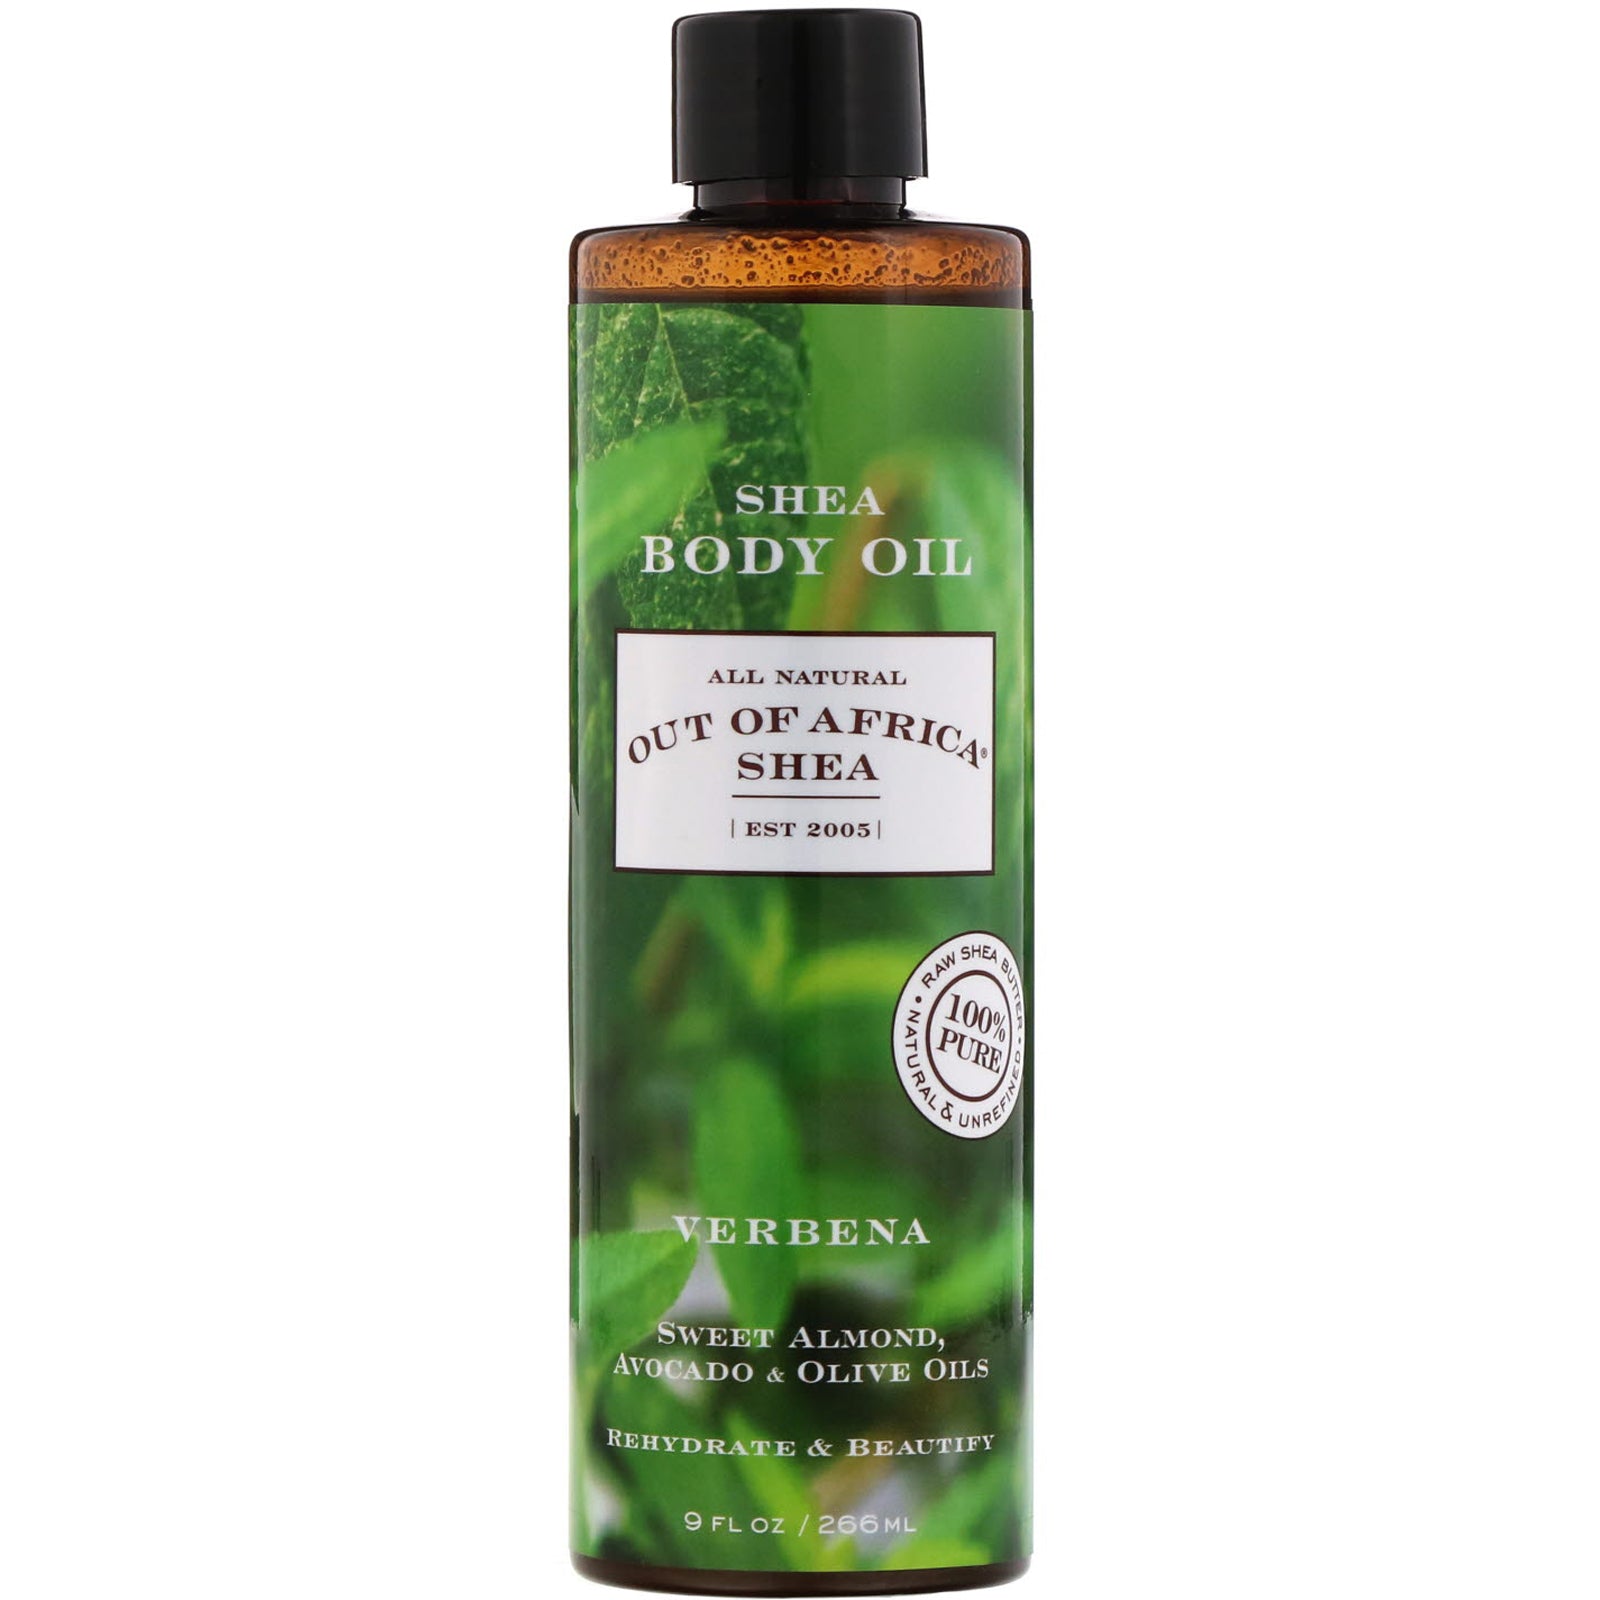 Out of Africa, Shea Body Oil, Verbena, 9 fl oz (266 ml)